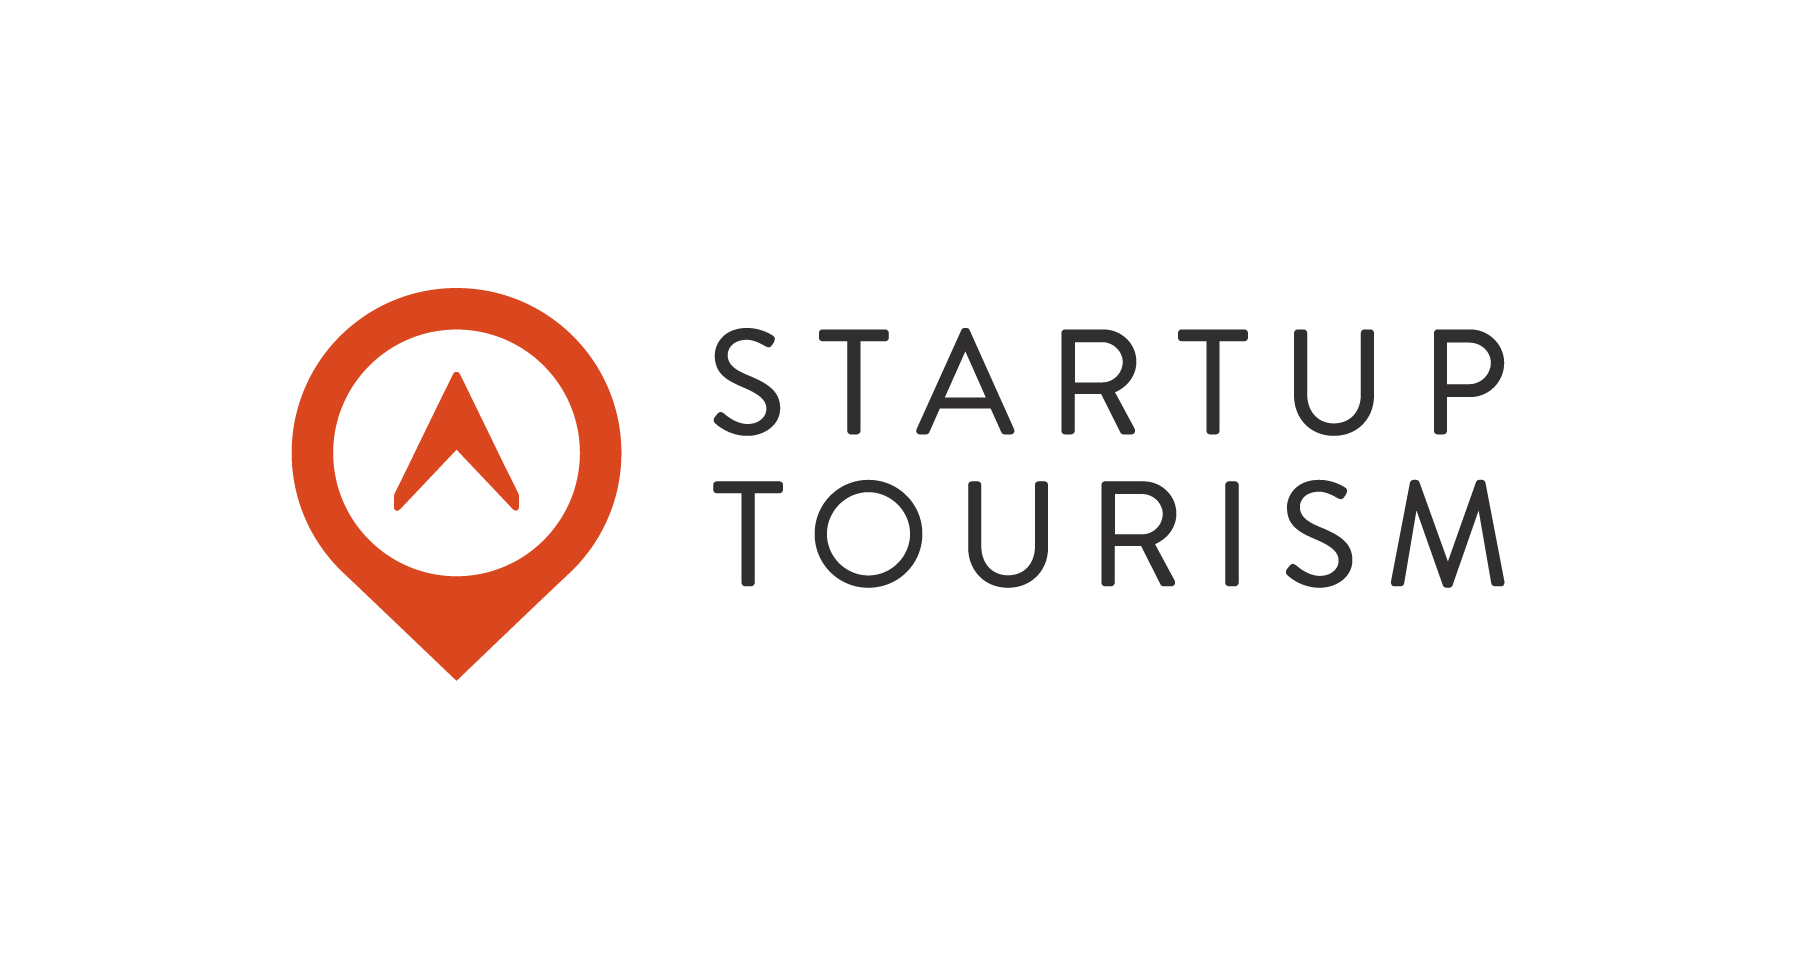 Startup Tourism